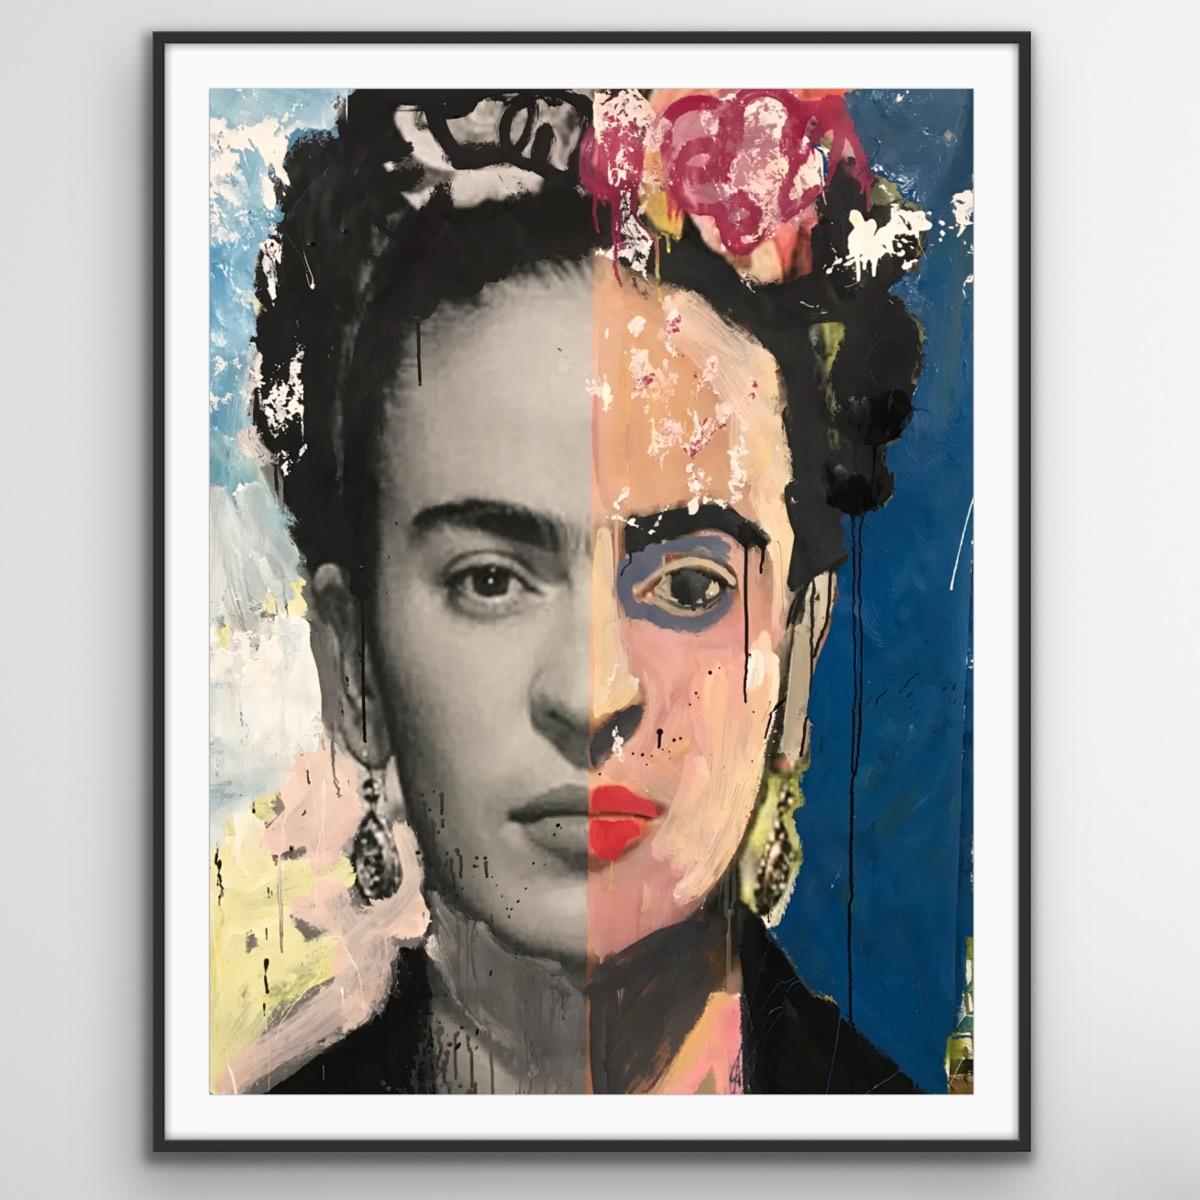 Andrew Cotton Portrait Painting - "The Frida", mixed media split portrait series